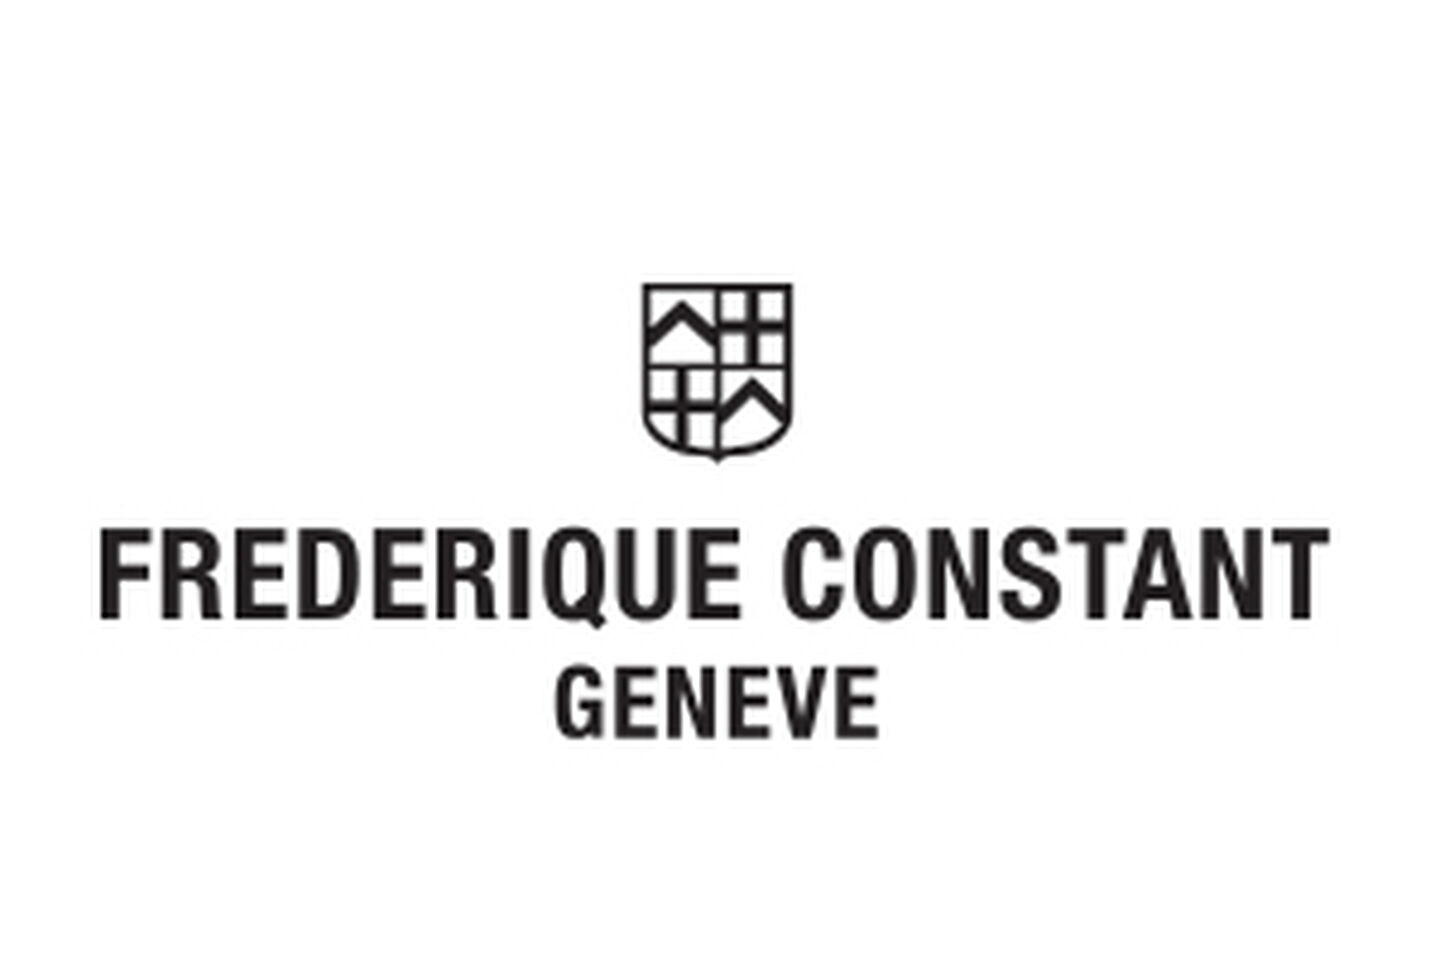 Frederique Constant Geneve logo